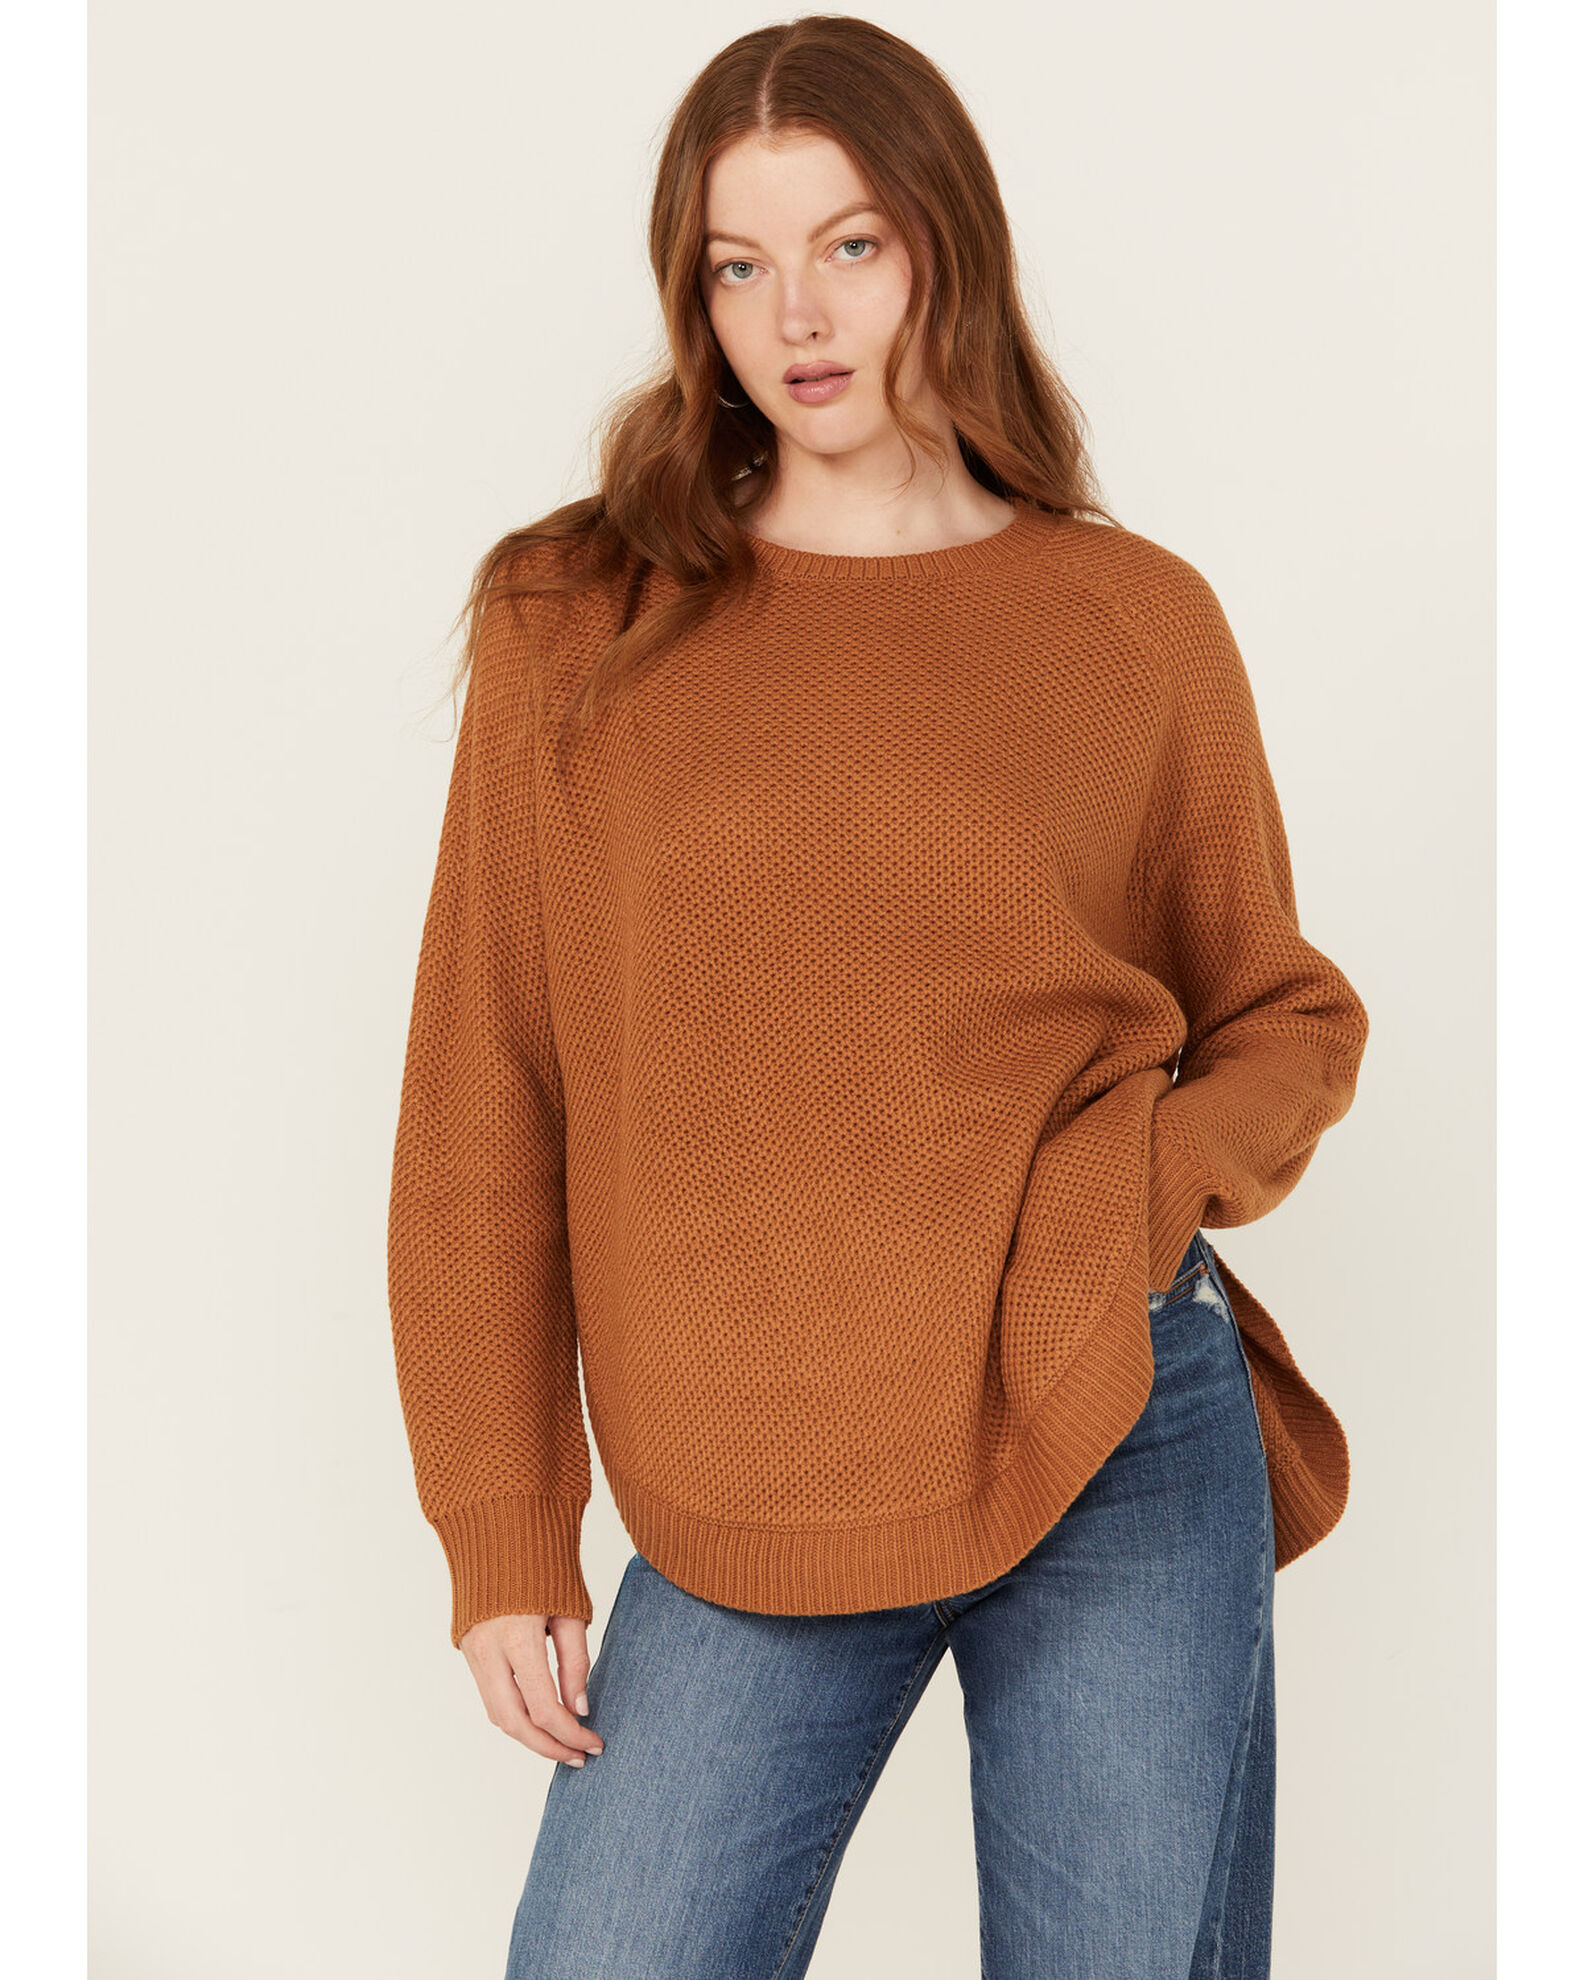 Cotton & Rye Women's Round Bottom Sweater